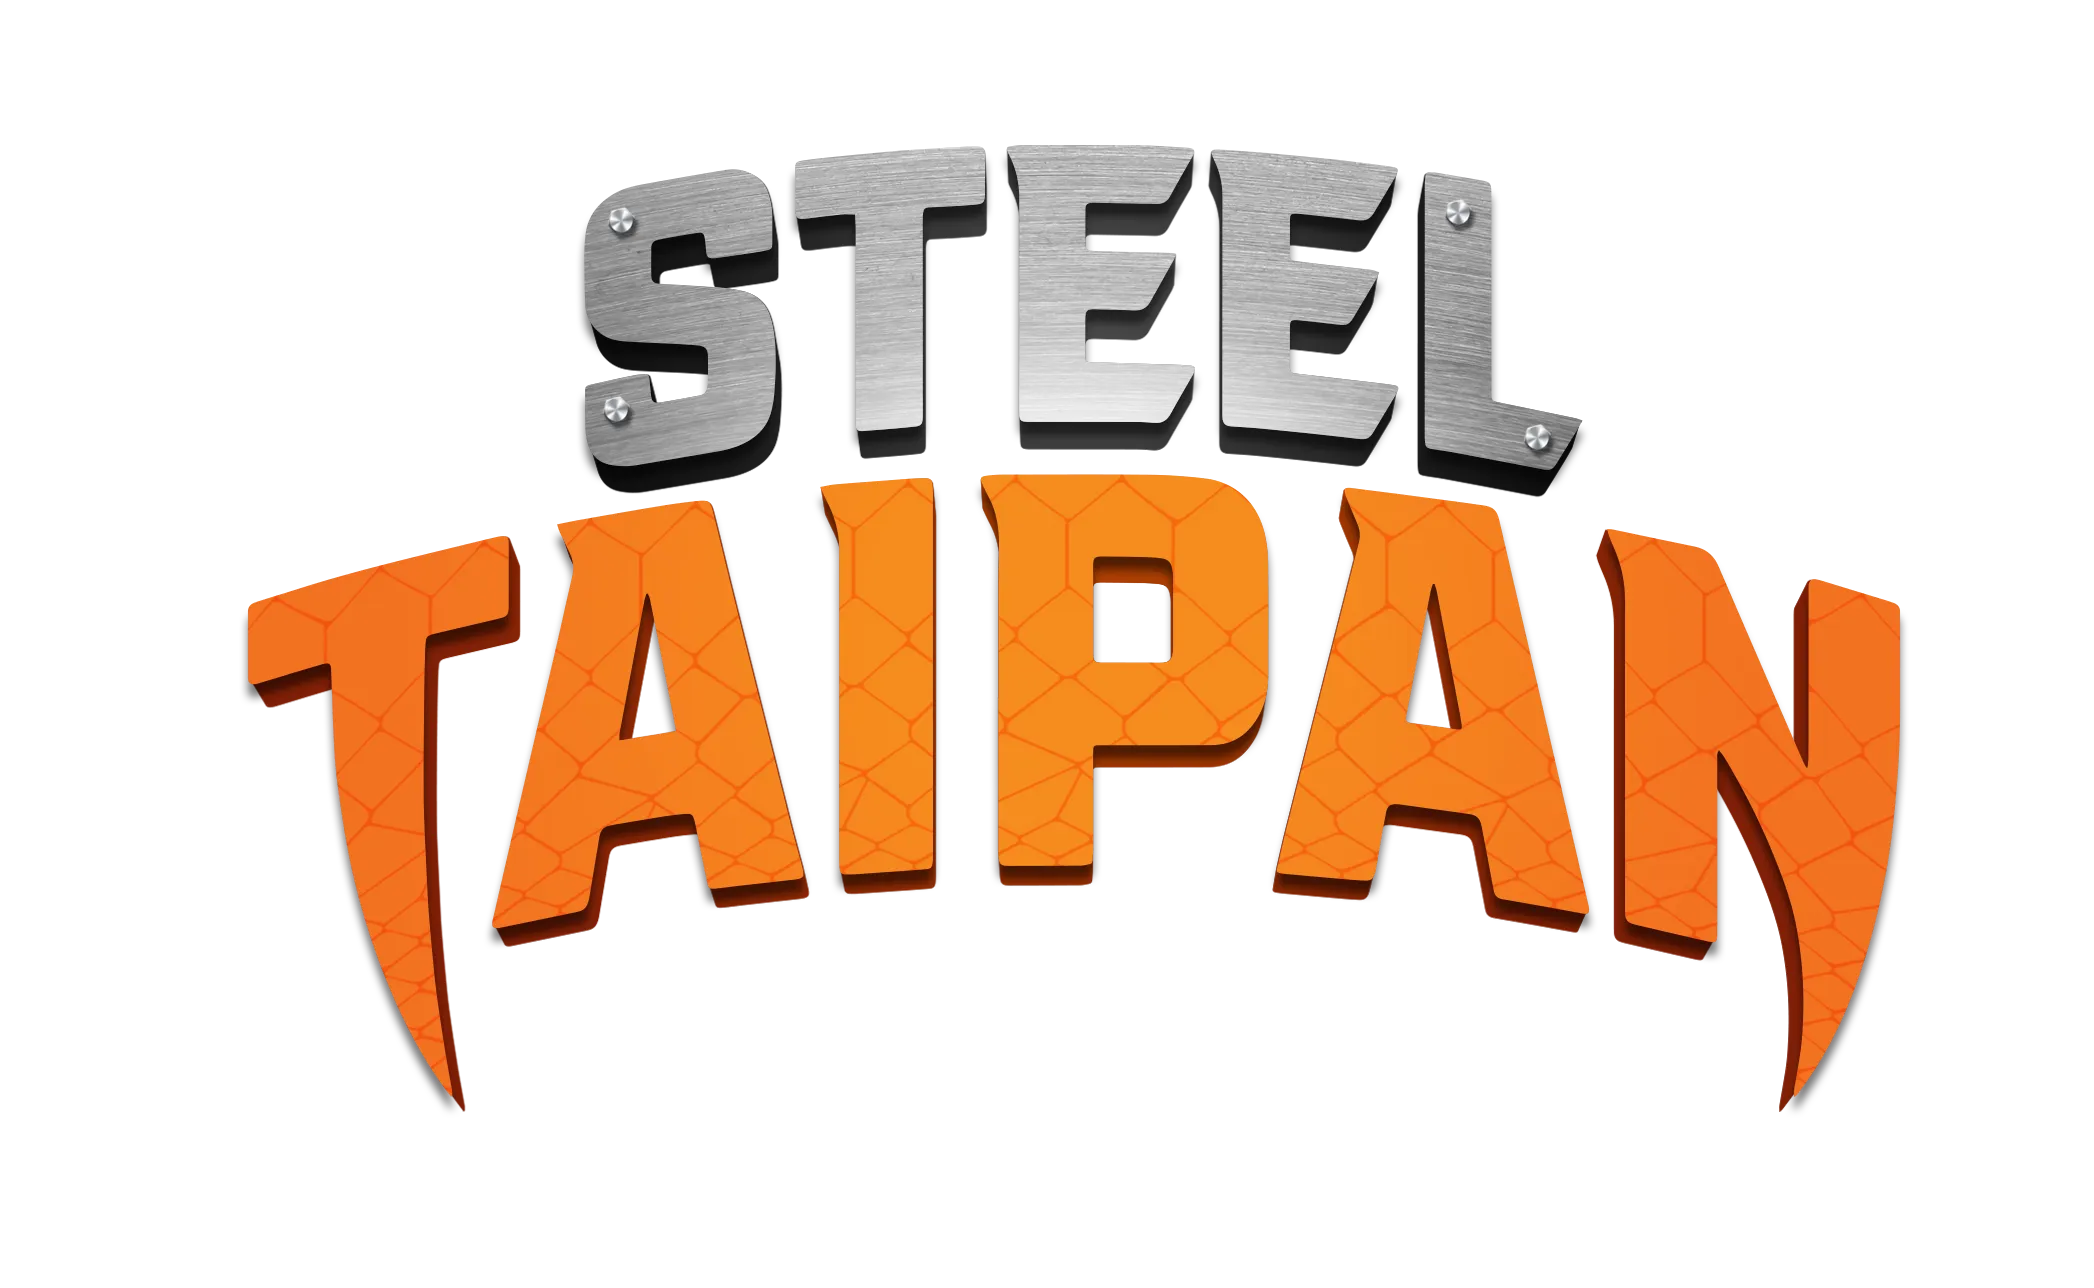 Steel Taipan logo